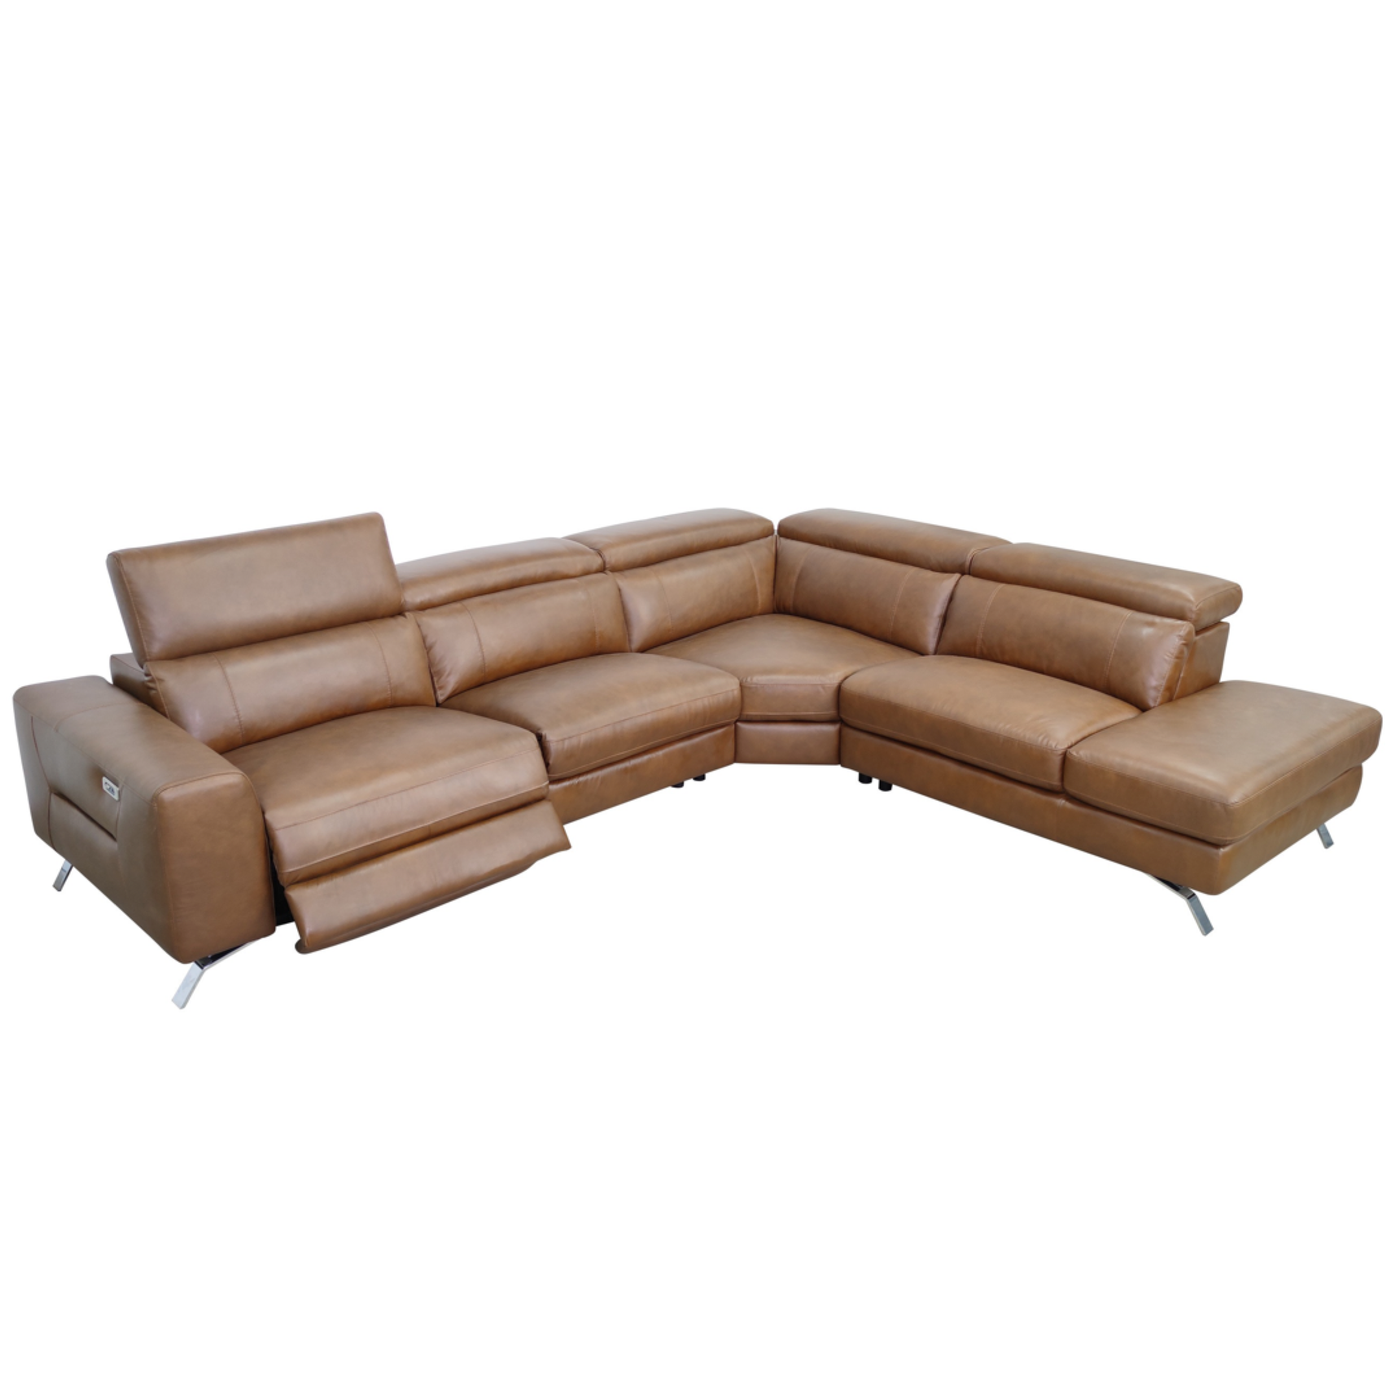 Penfold Full Leather Corner Sofa